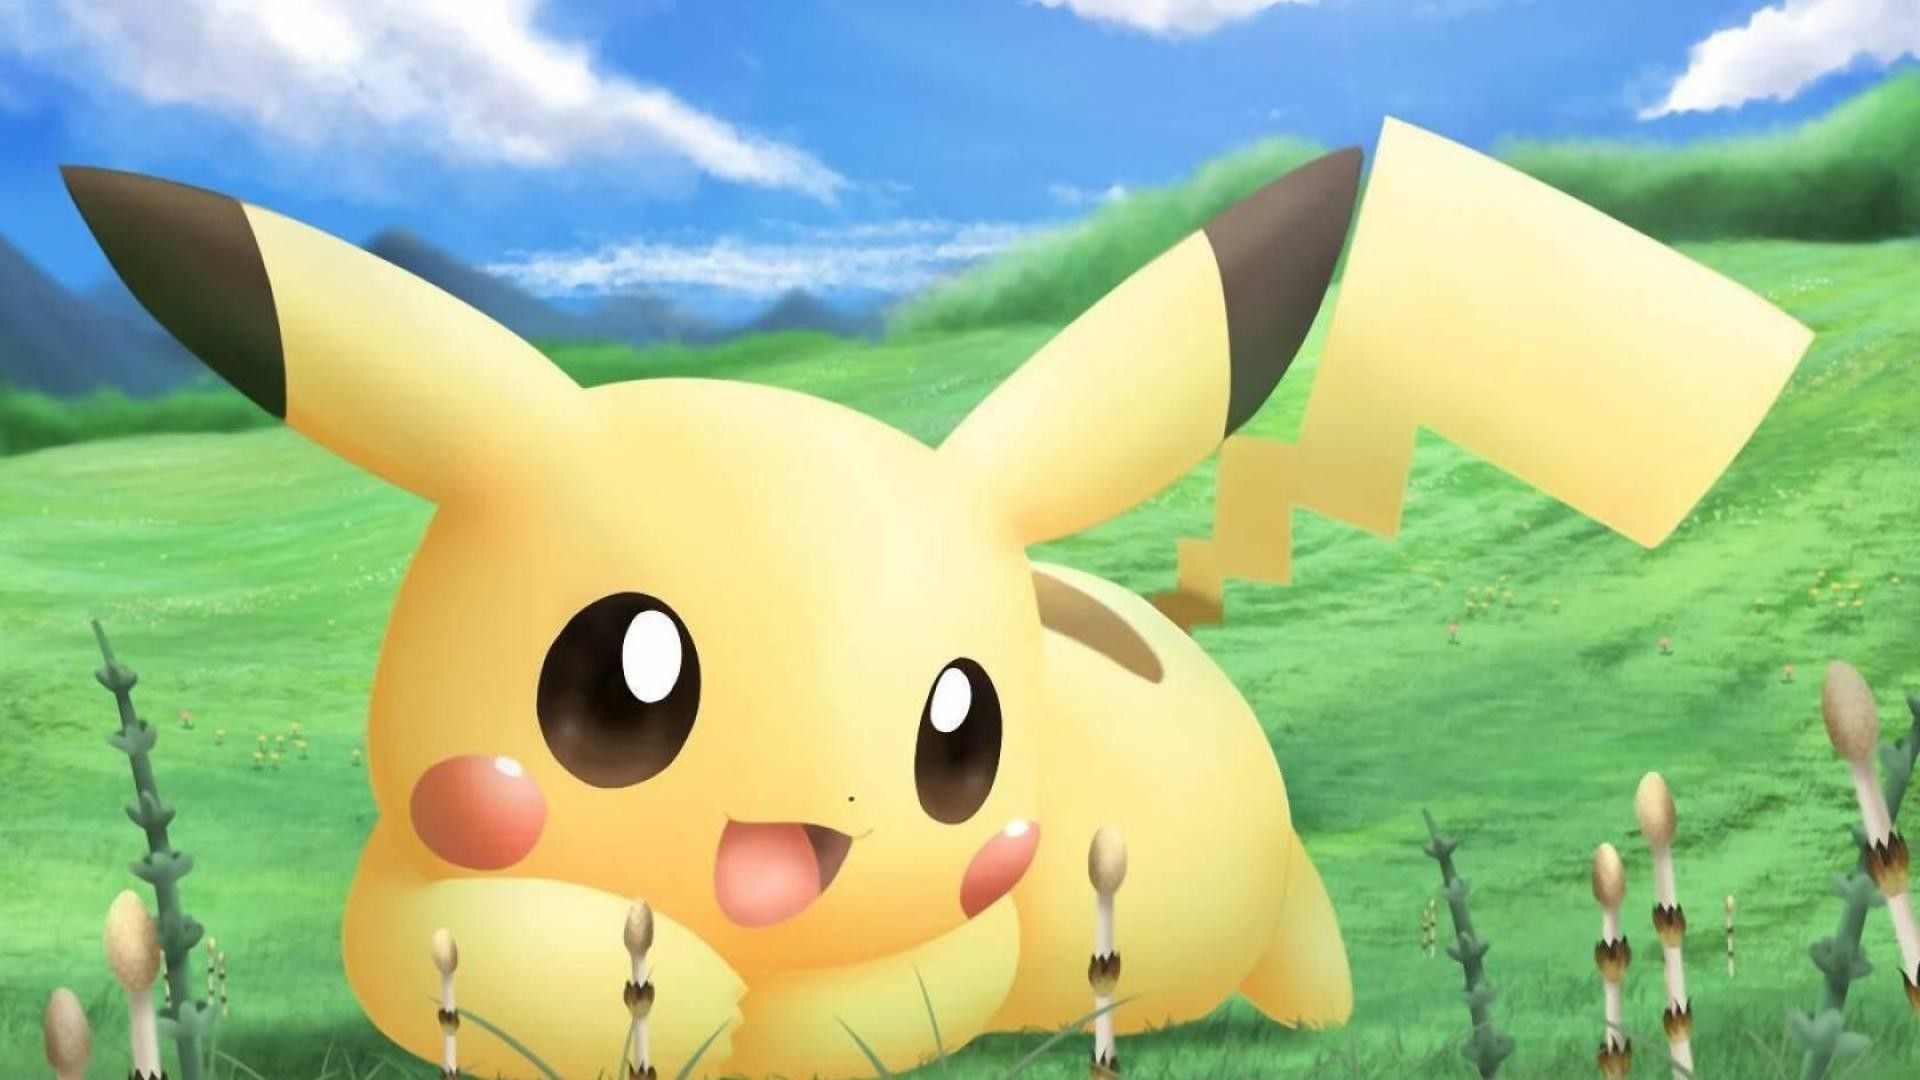 See more ideas about kawaii, pikachu wallpaper, cute pikachu. 